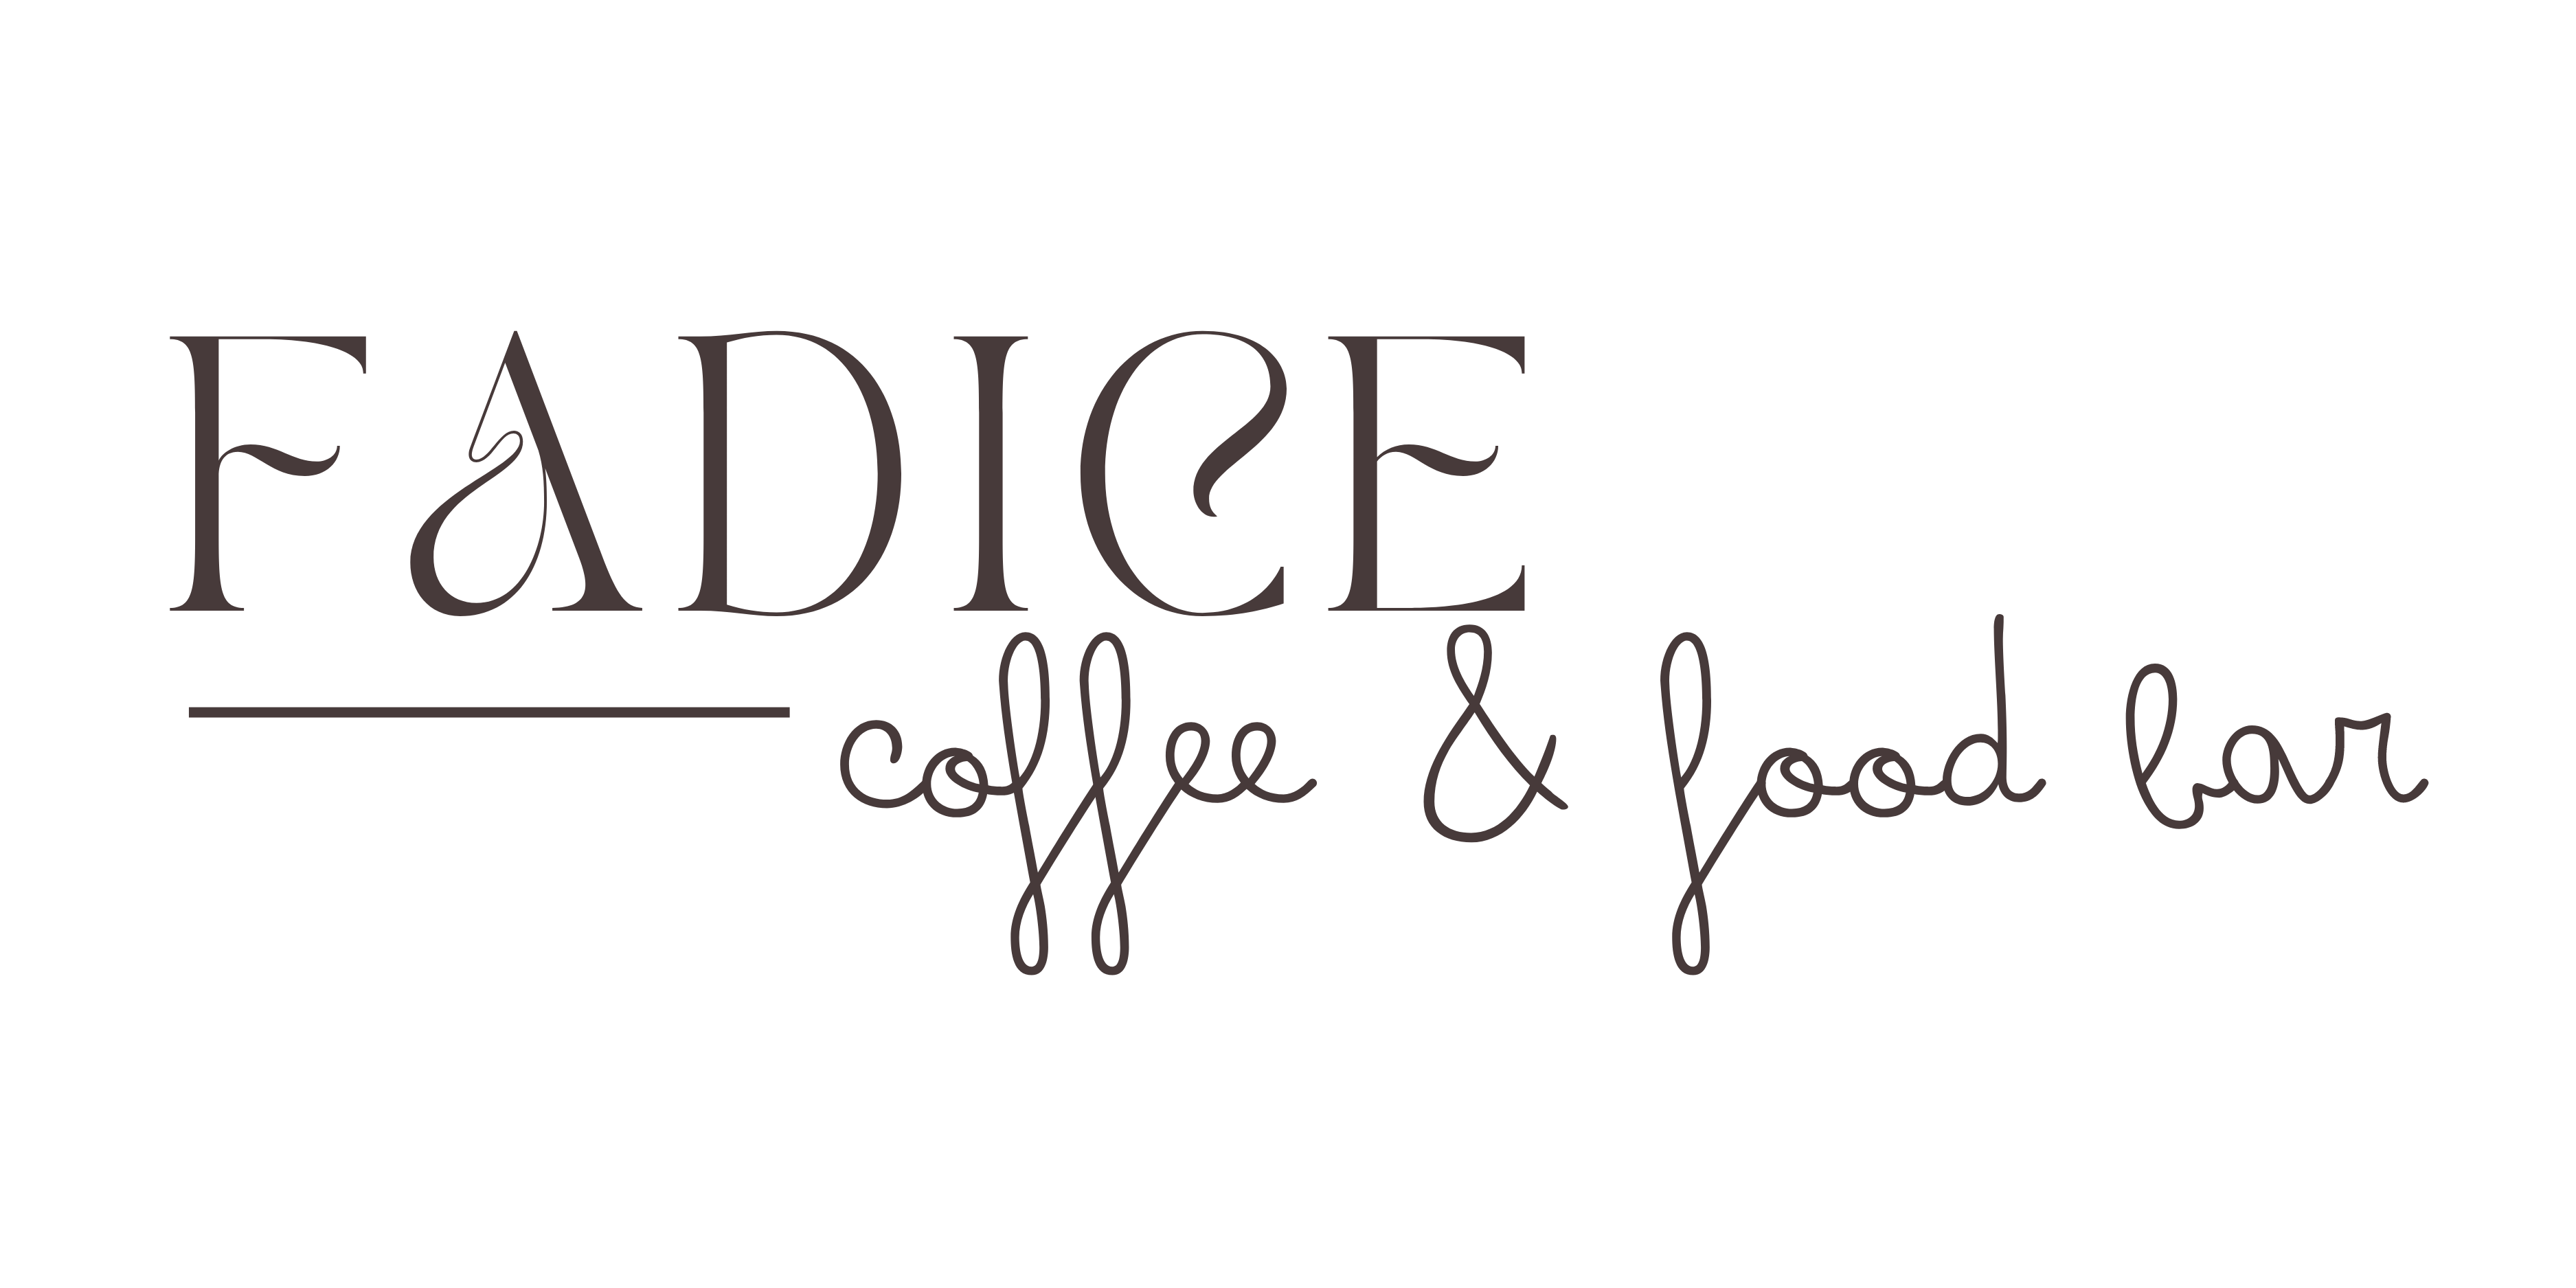 Fadice - Coffee and Food Bar